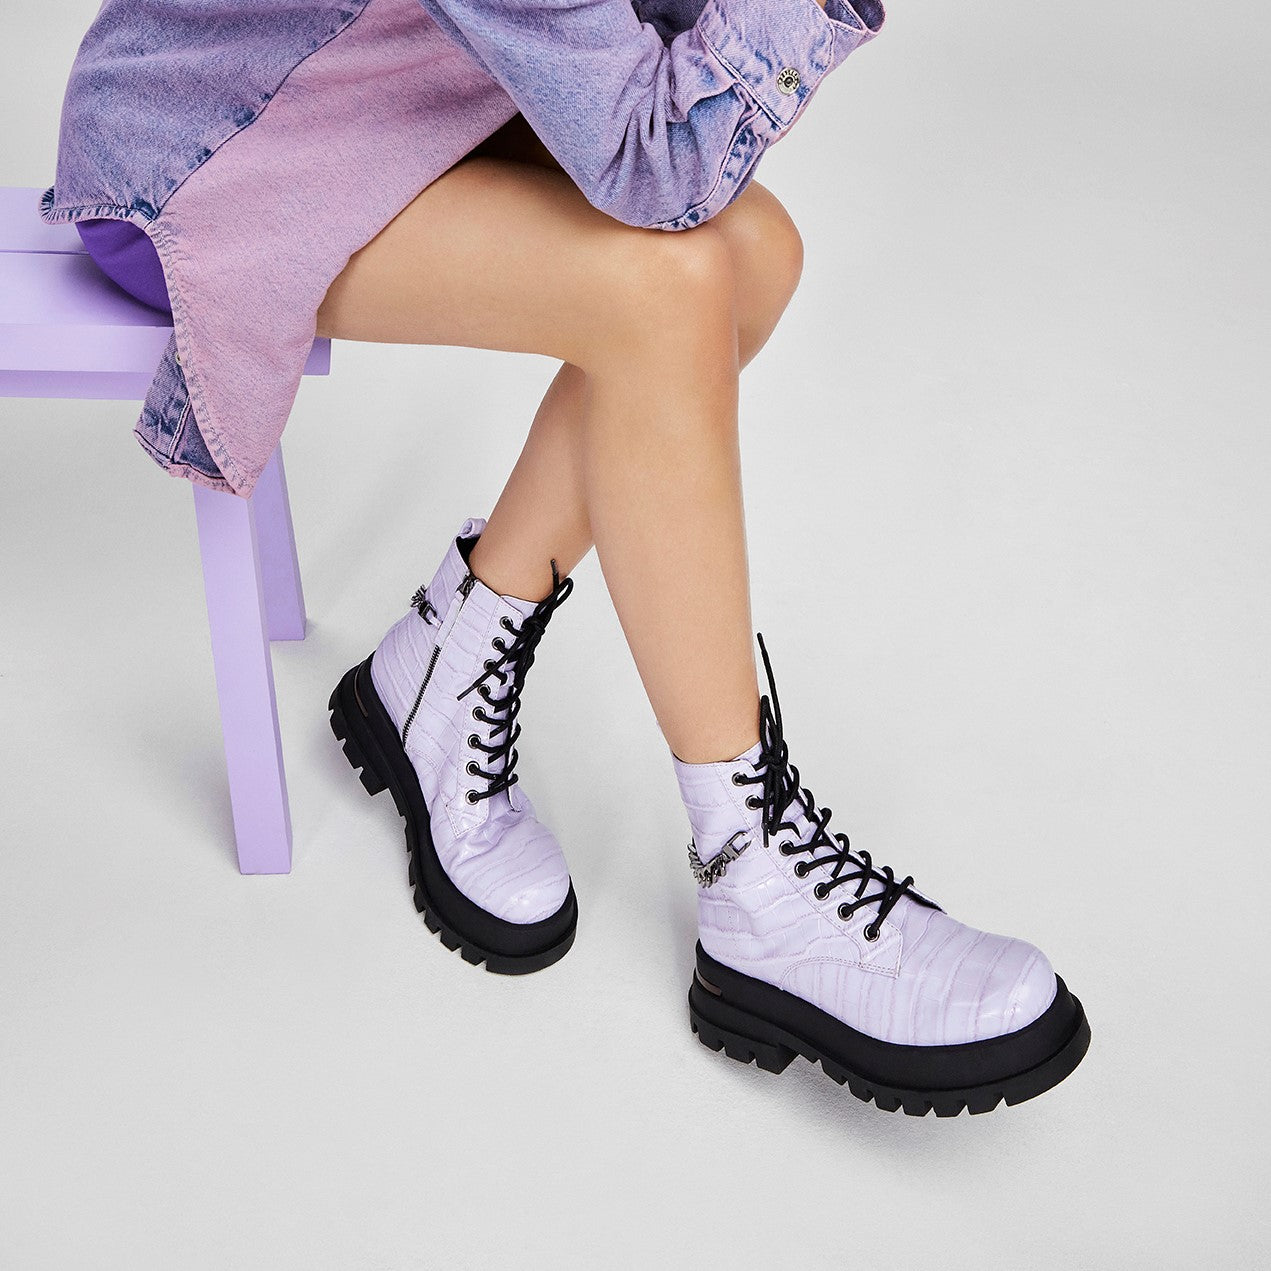 Aldo Women’s Ankle Boots Grandeur (Purple)